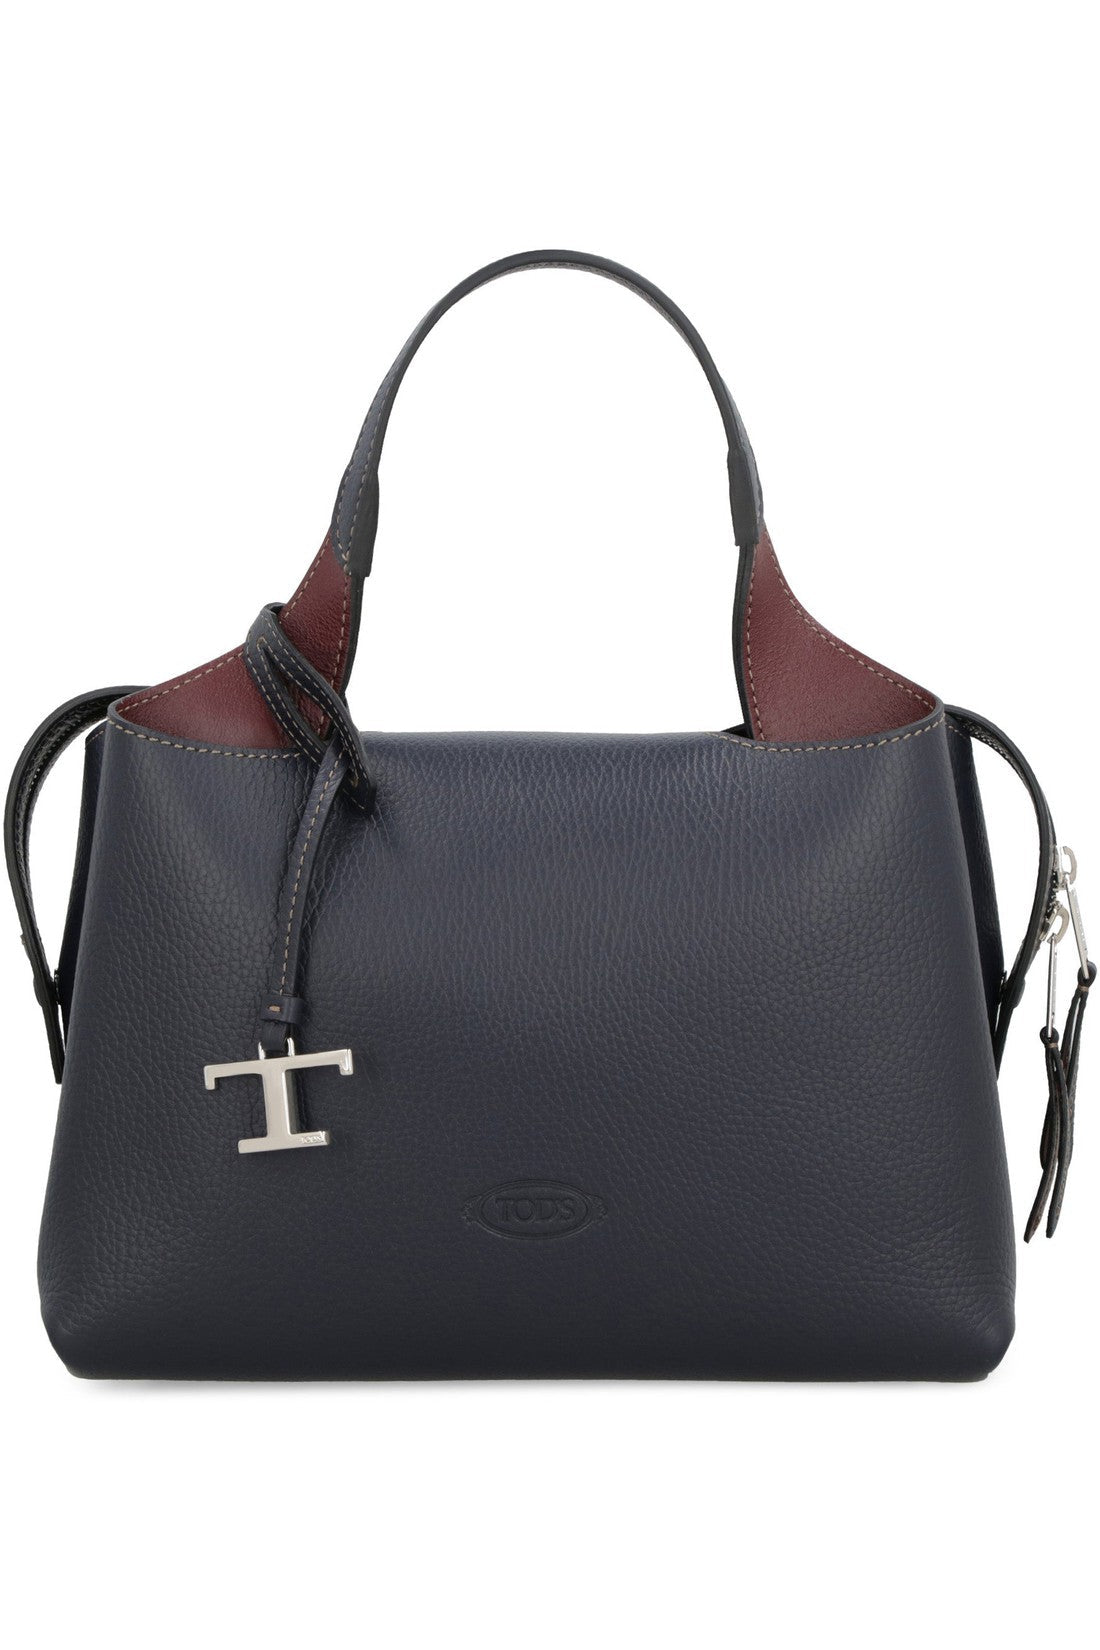 Tod's-OUTLET-SALE-Leather boston bag-ARCHIVIST